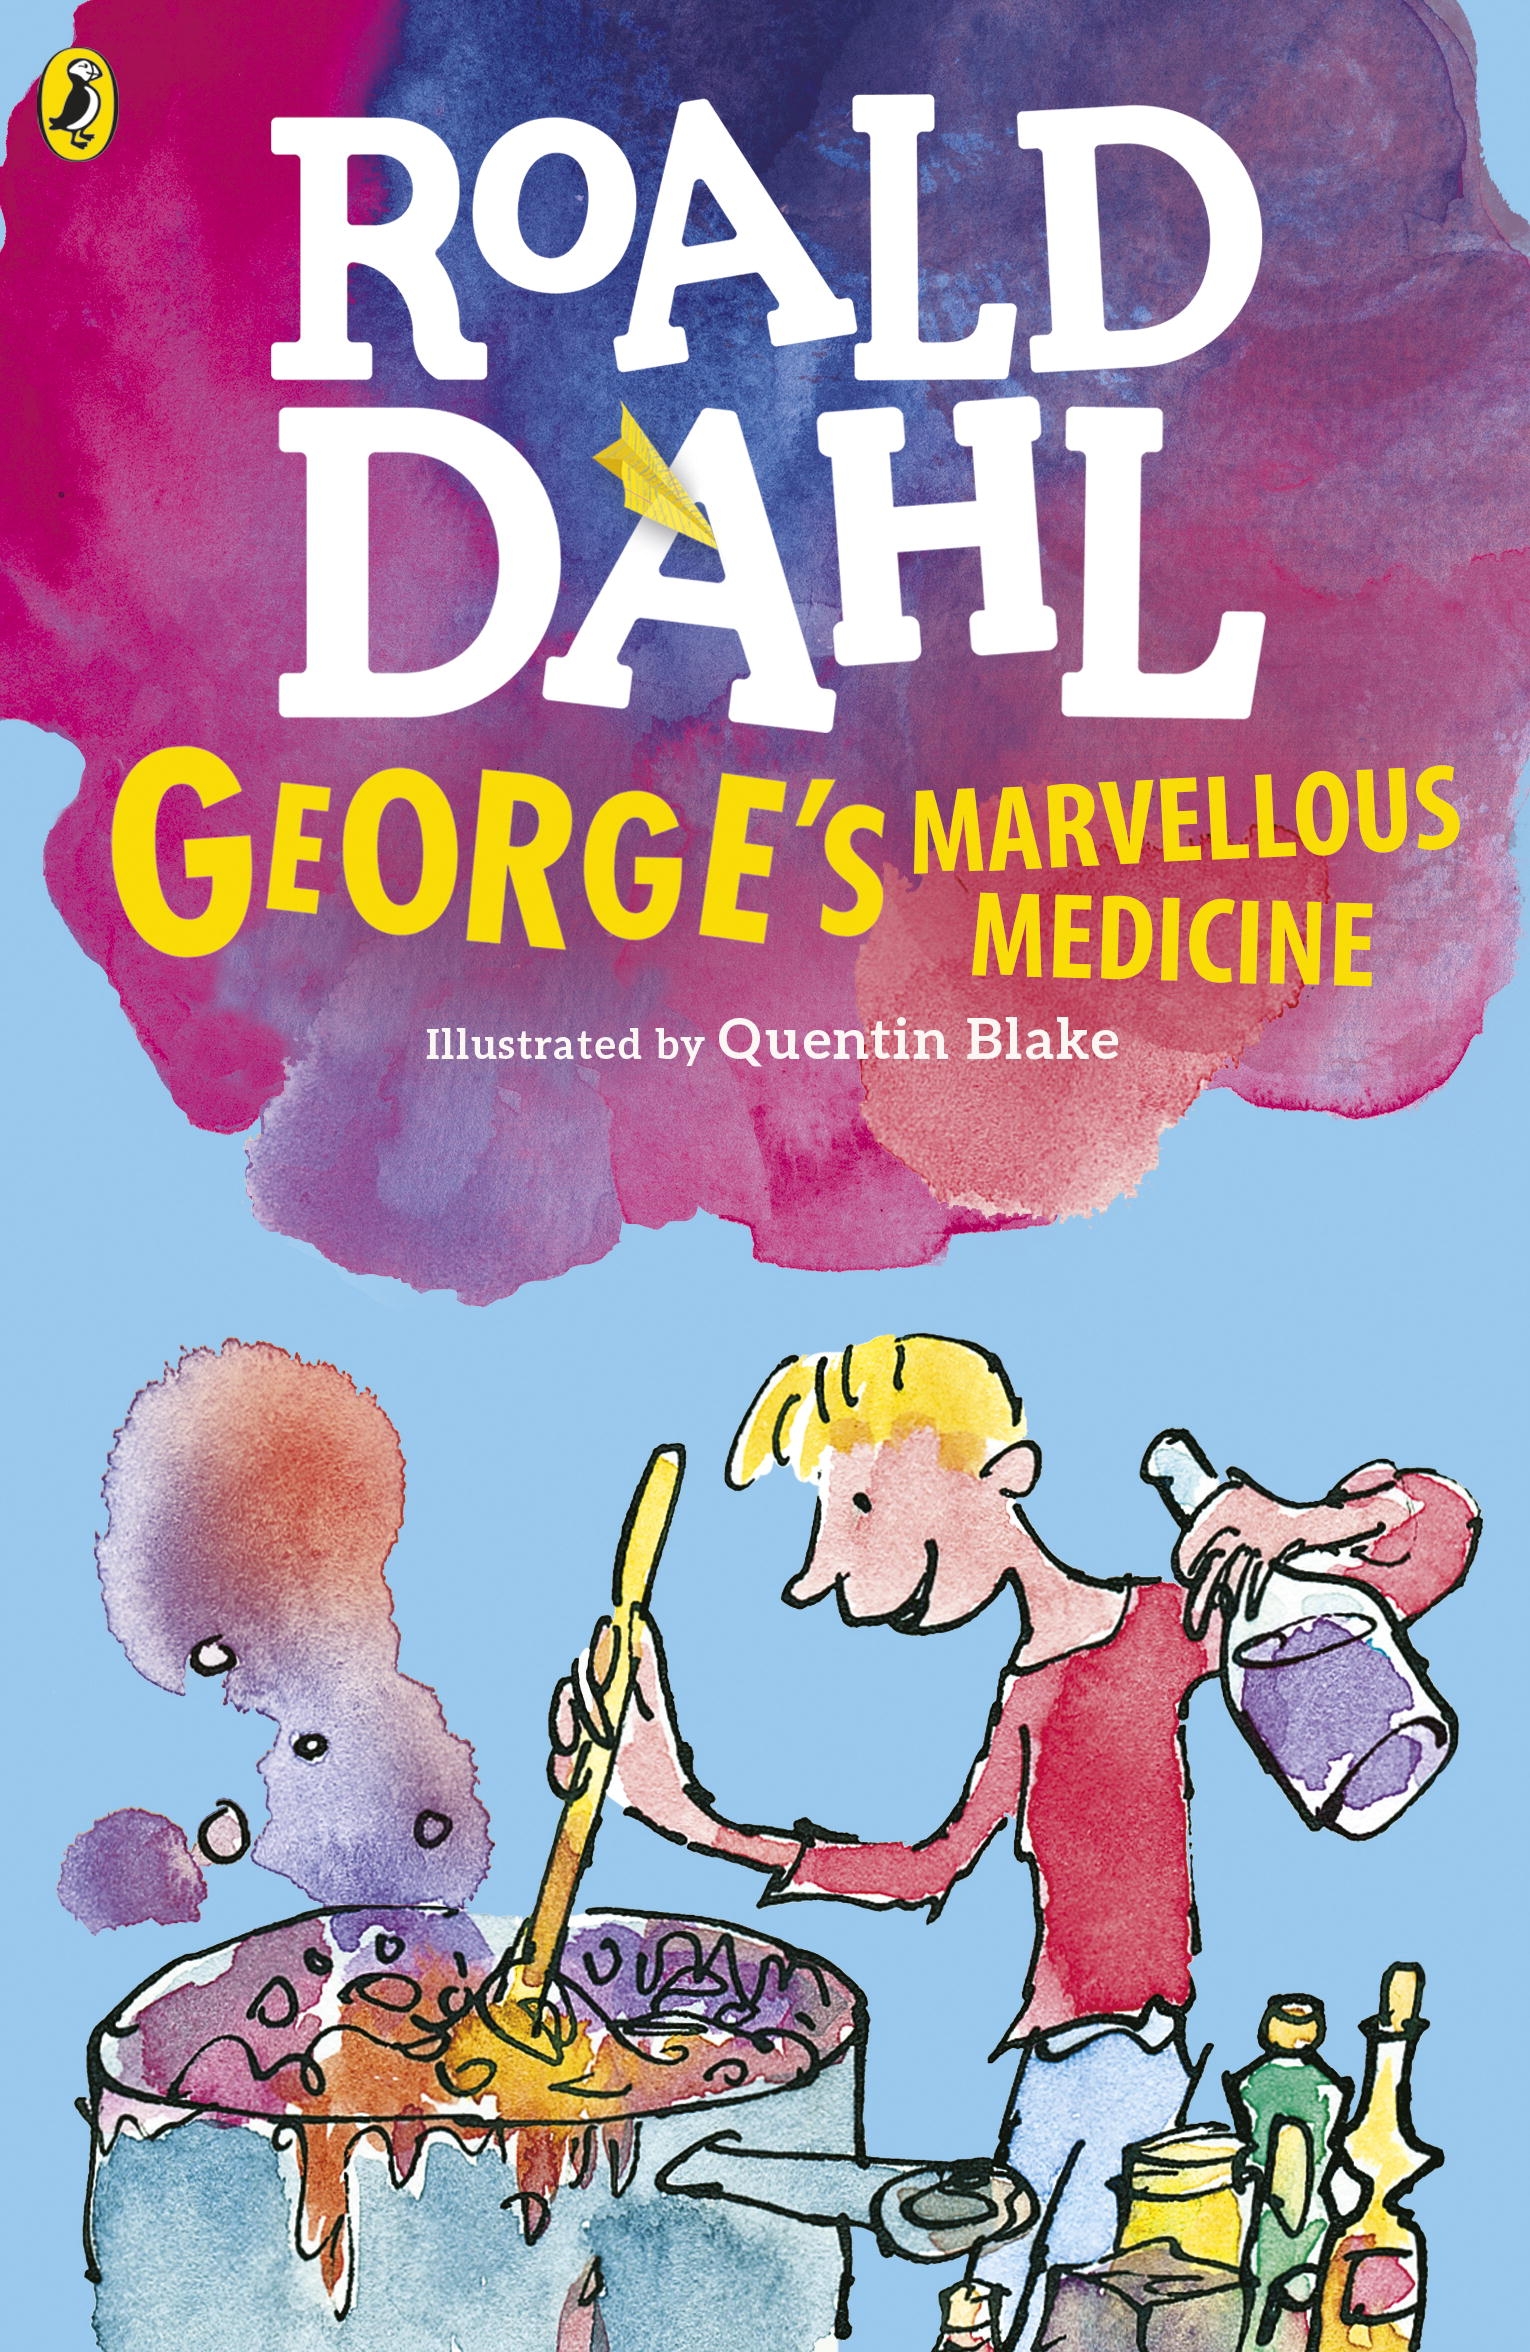 George's Marvellous Medicine by Roald Dahl - Penguin Books New Zealand